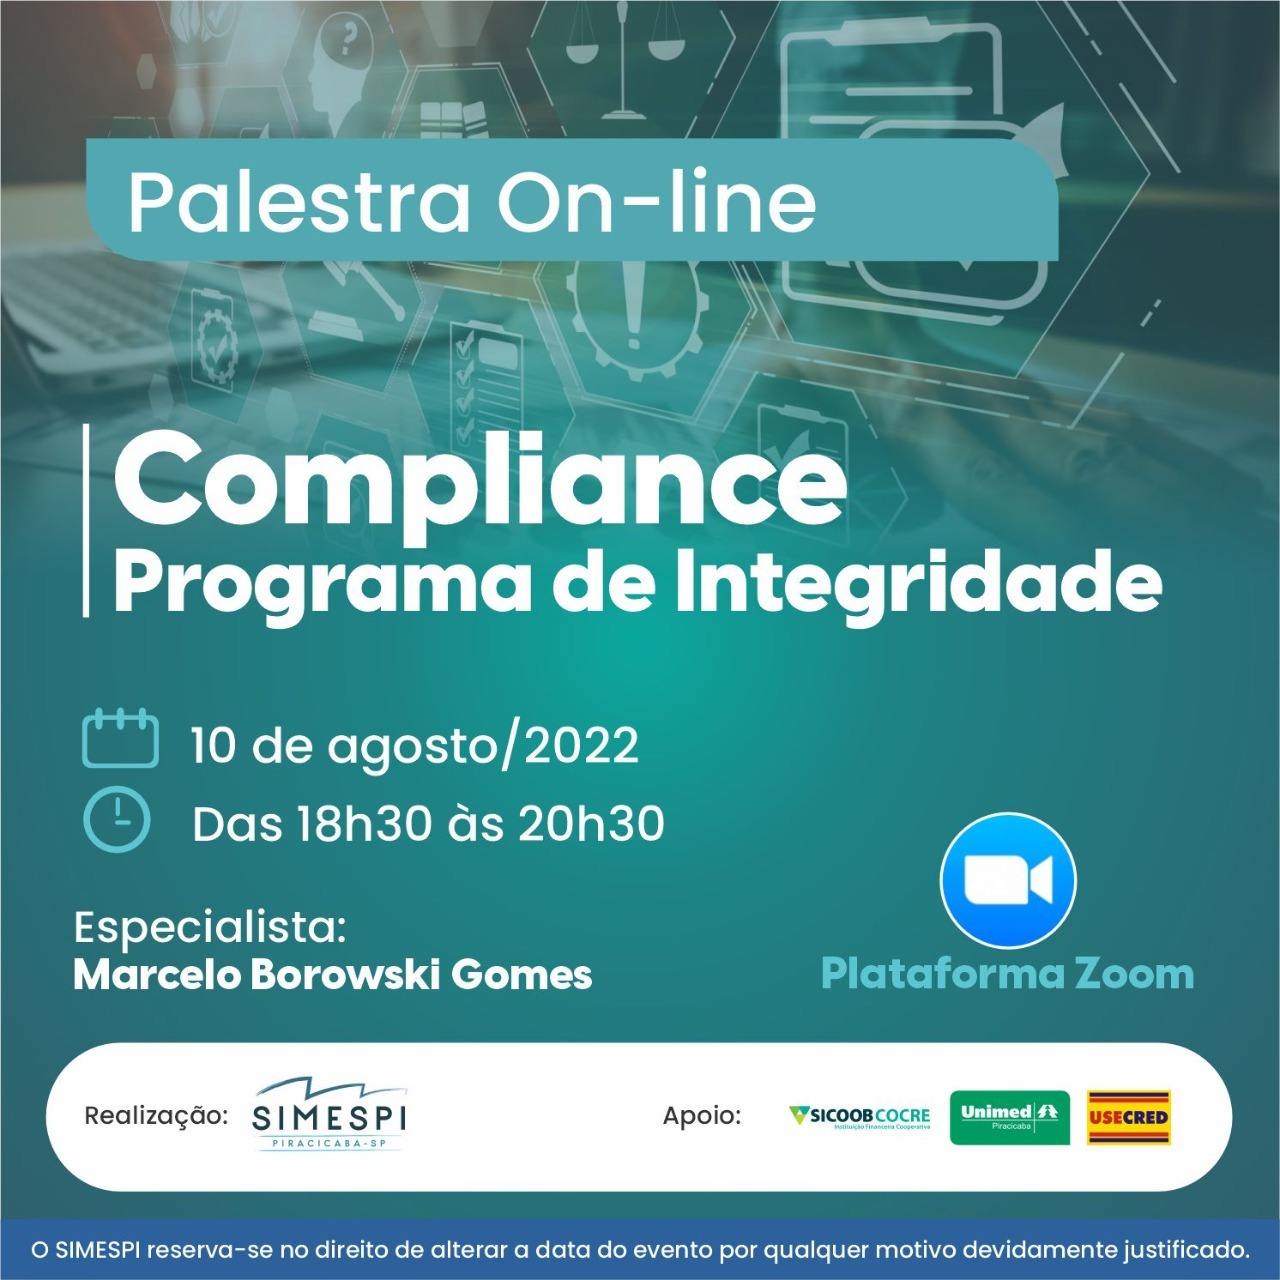 Palestra On-line sobre Compliance – Programa de Integridade